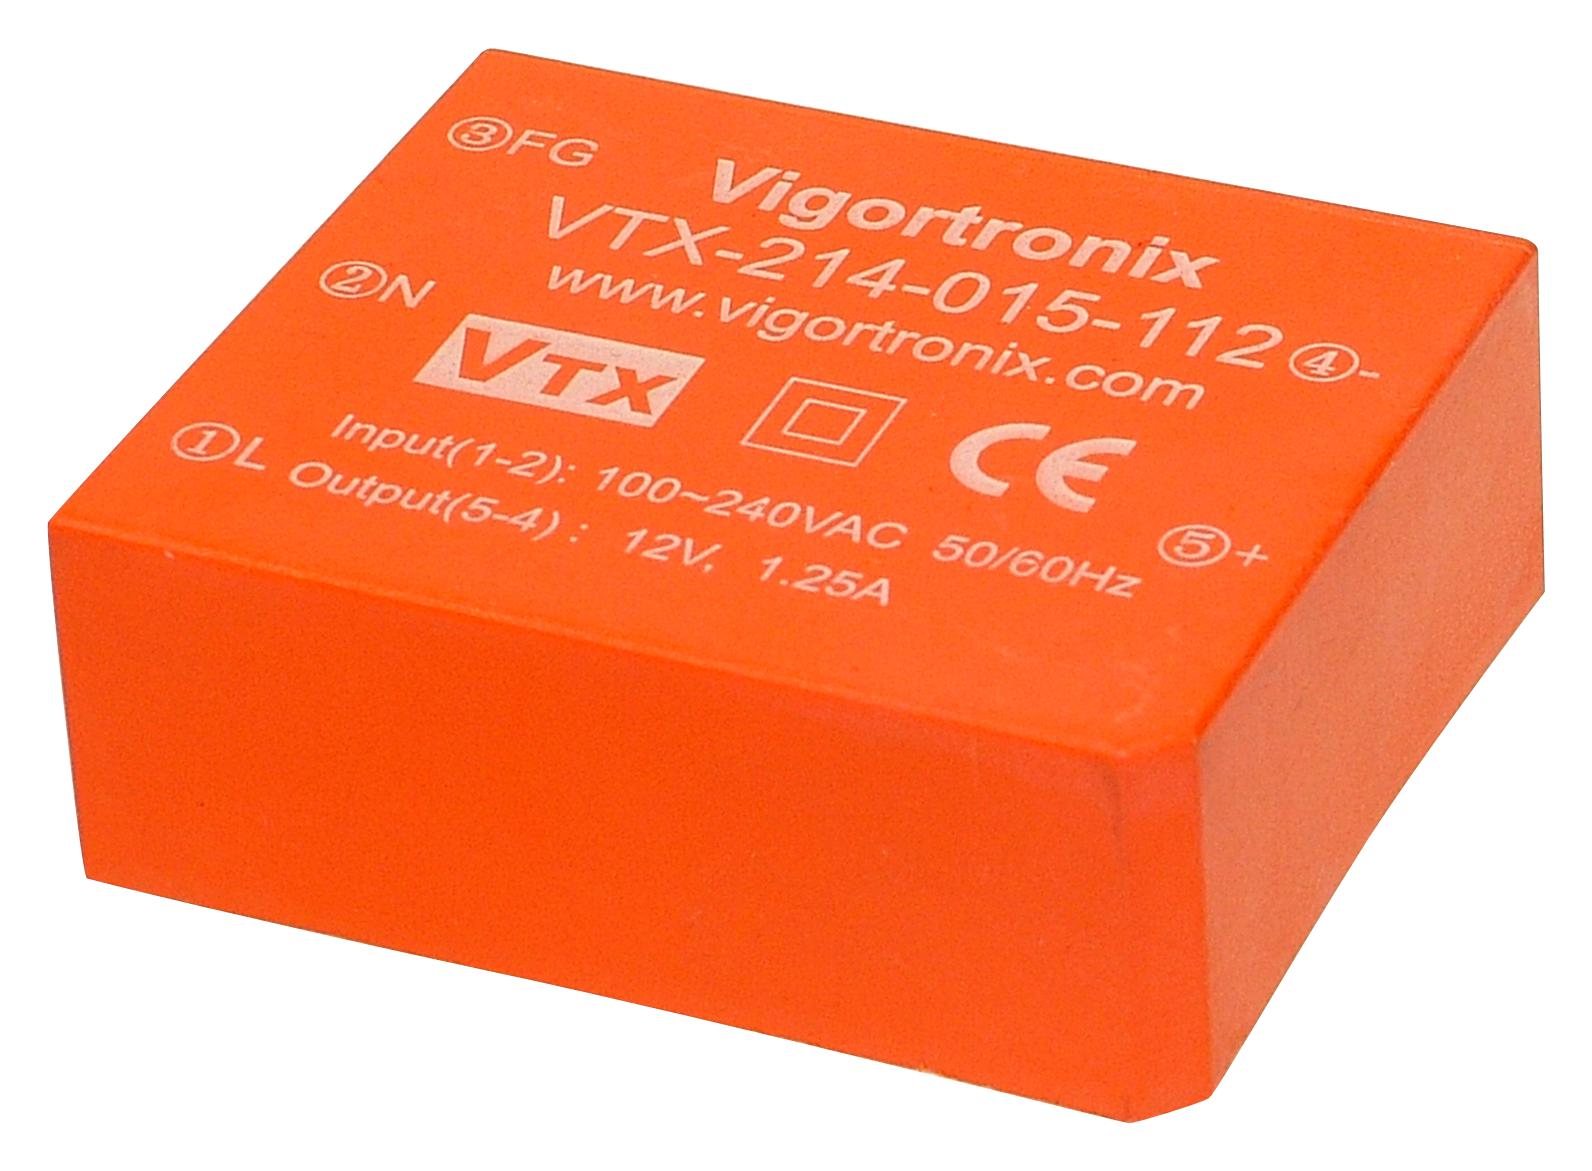 VTX-214-015-124 POWER SUPPLY, AC-DC, 24V, 0.625A VIGORTRONIX